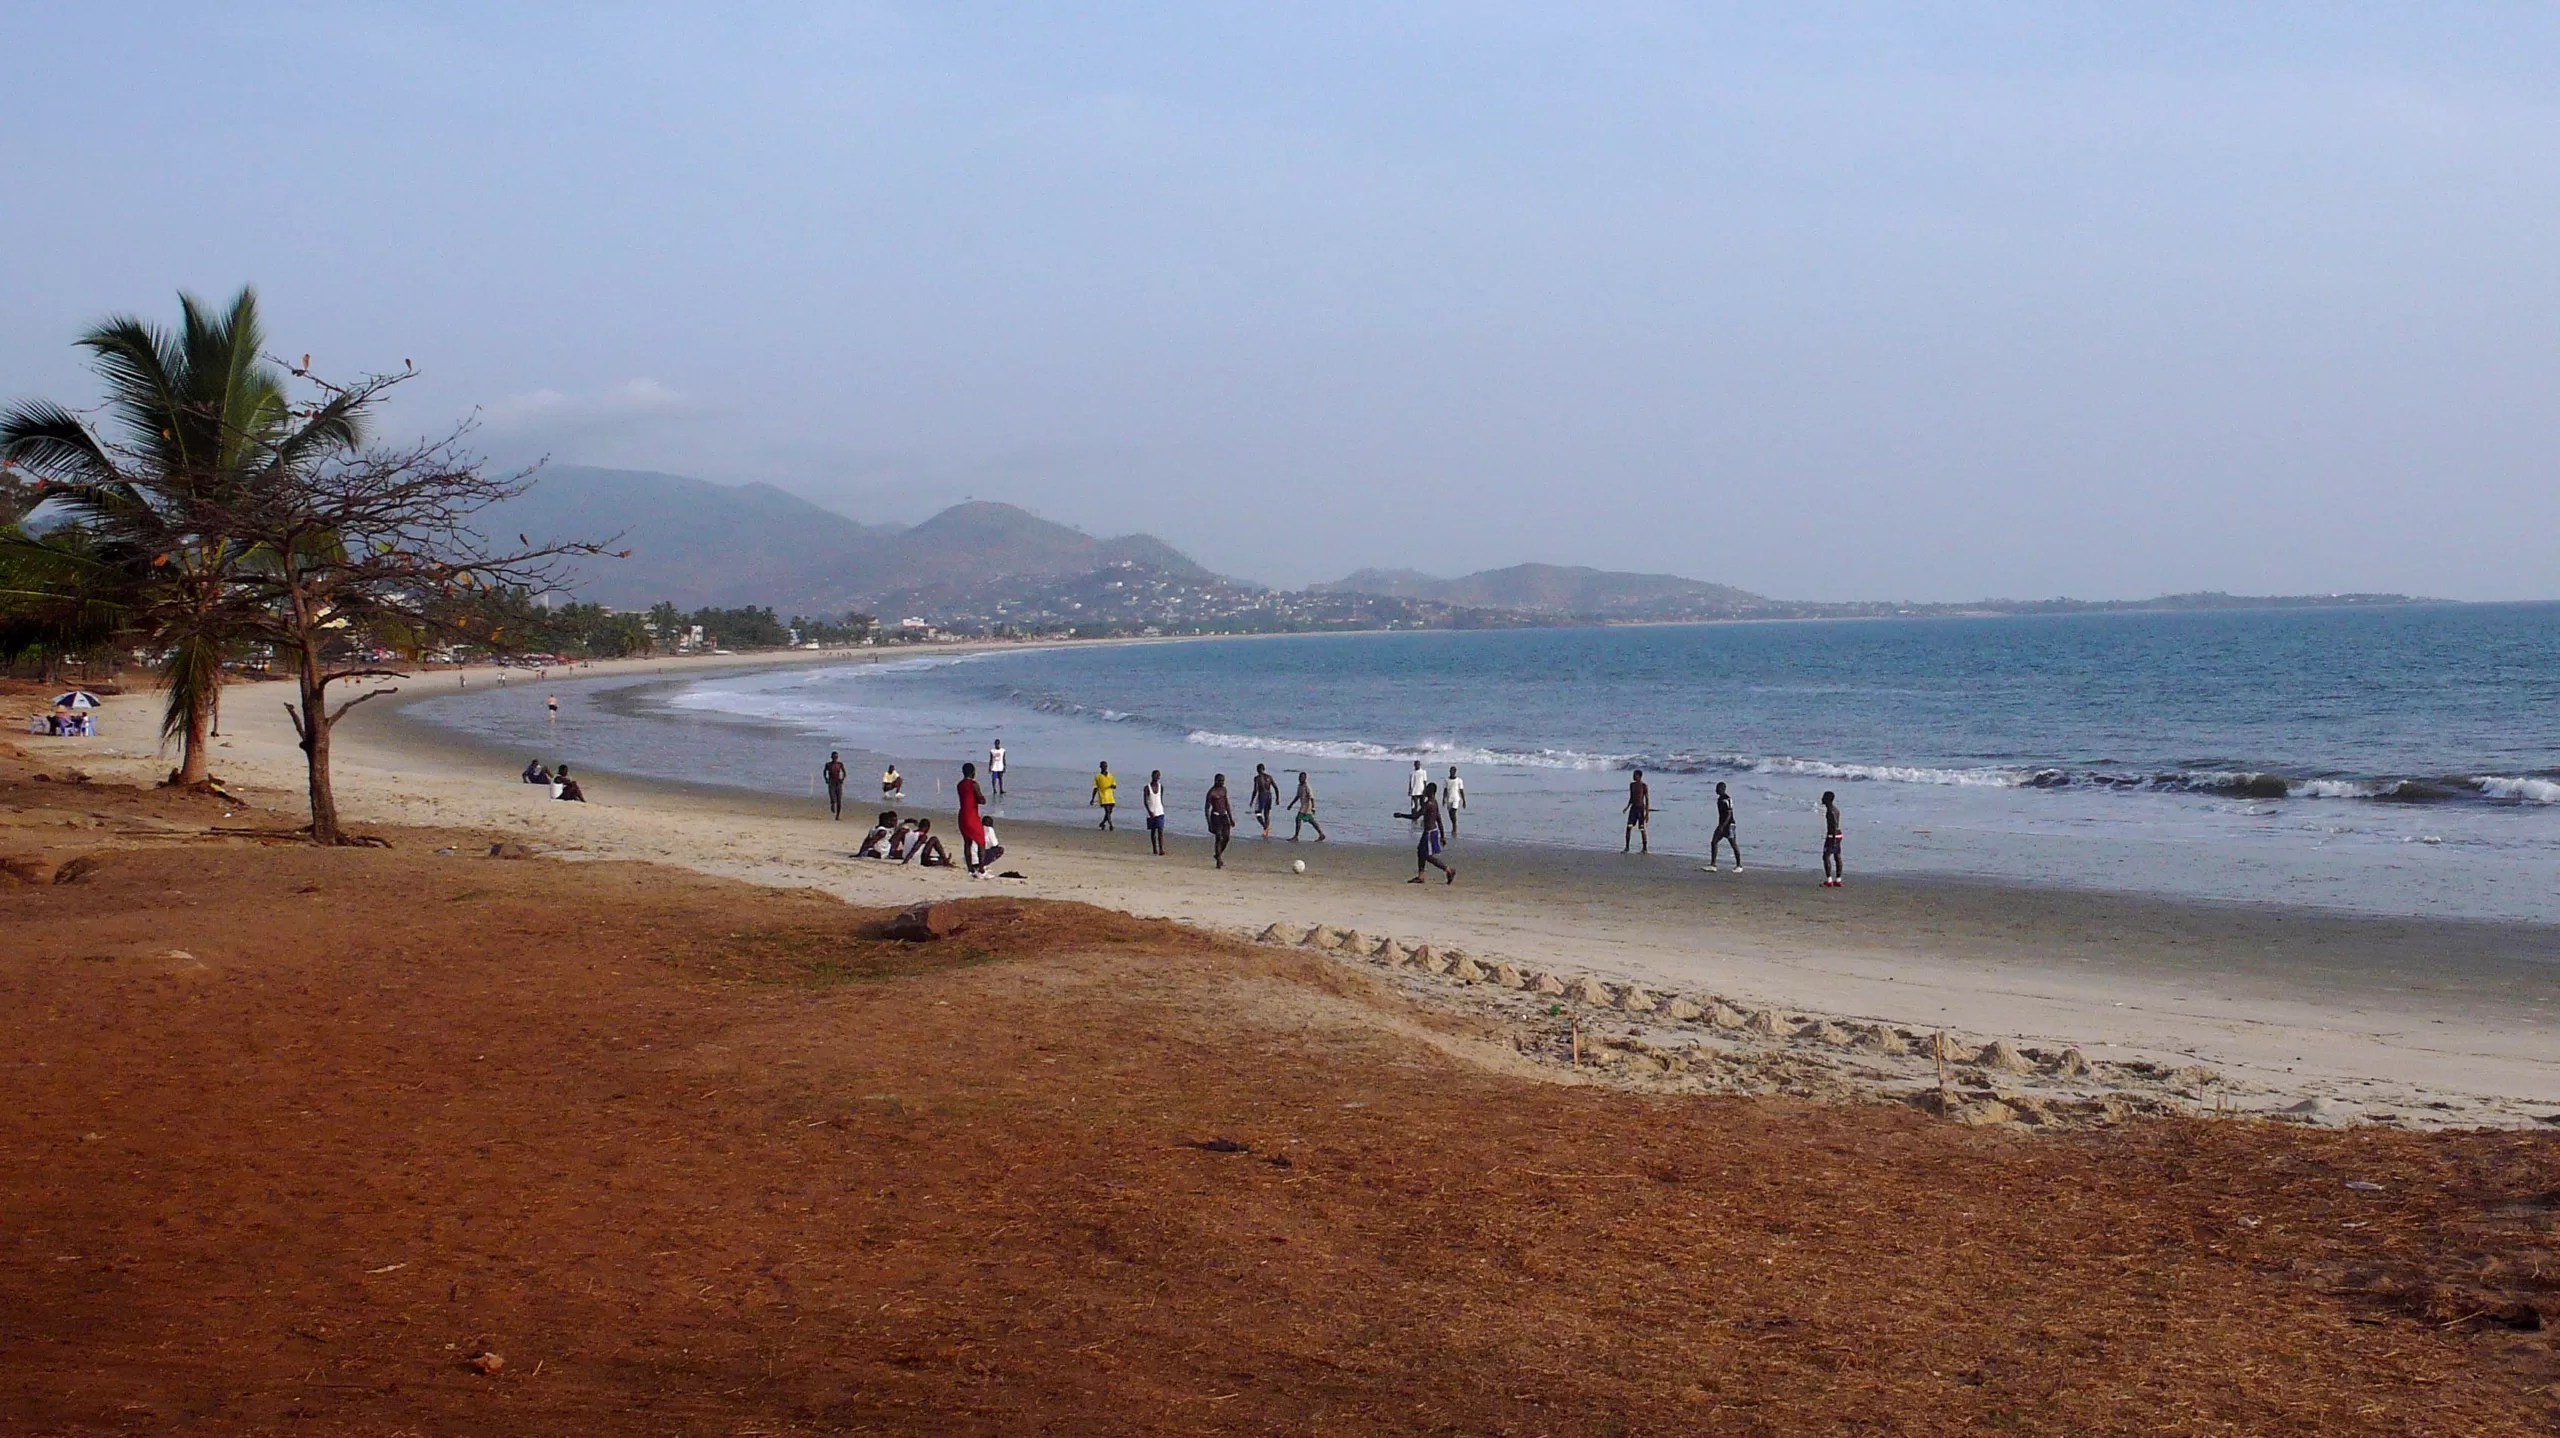 Lumley beach in Sierra Leone